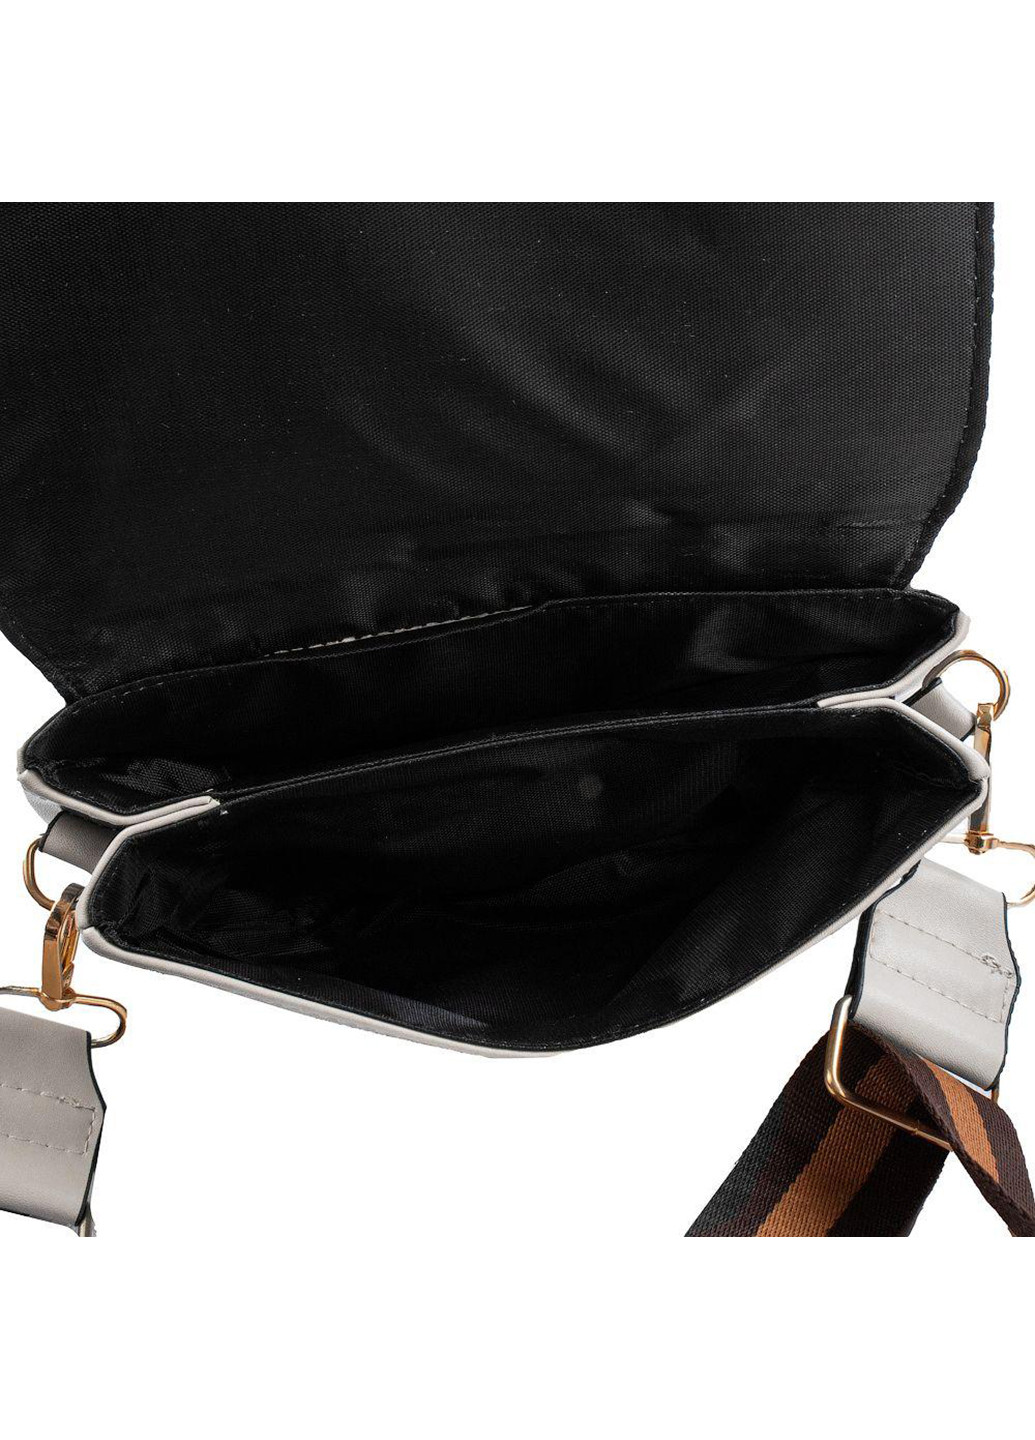 Женская сумка-клатч 21х16х3 см Valiria Fashion (252127732)